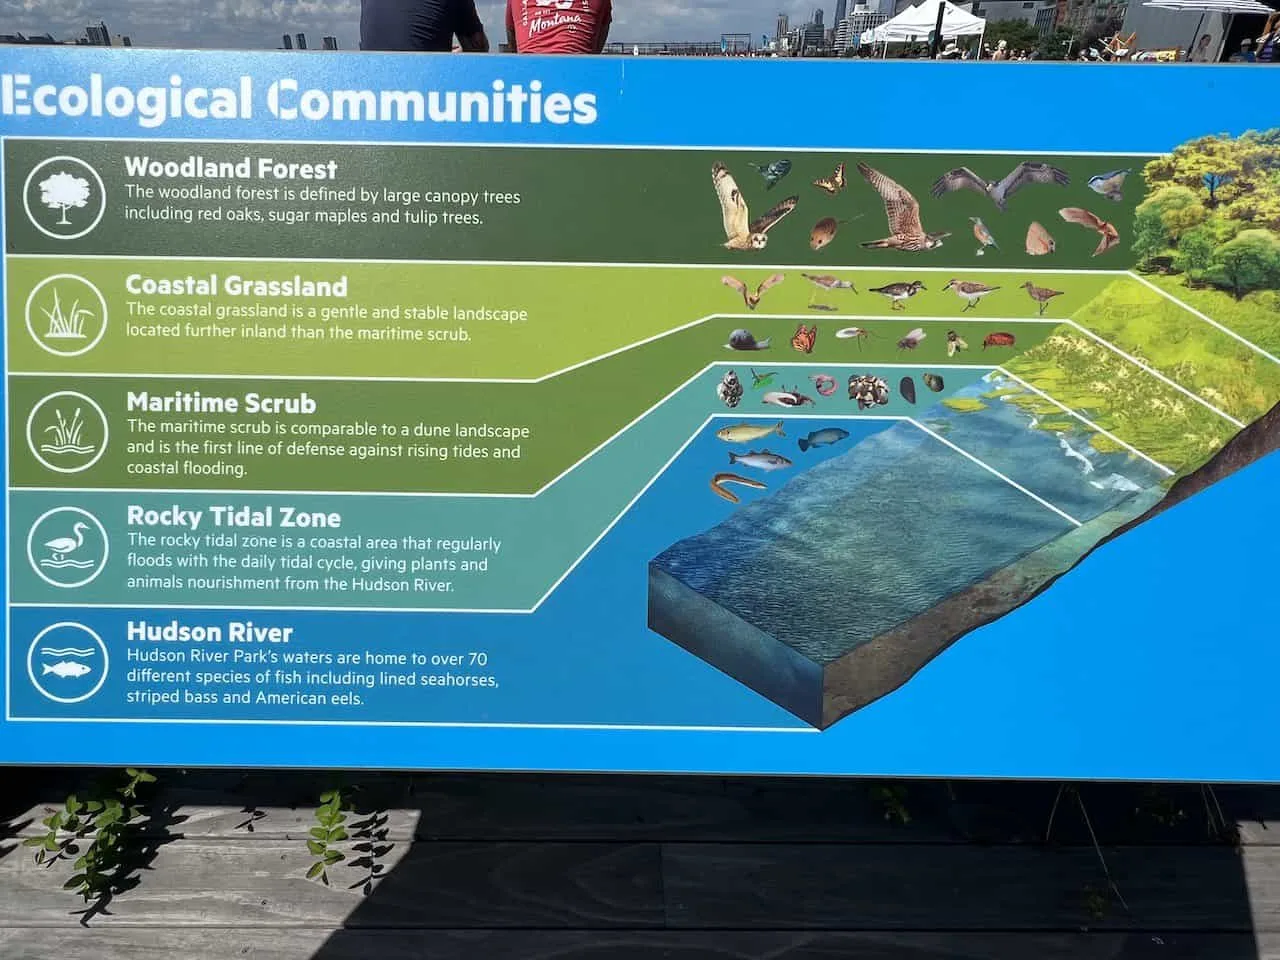 Pier 26 Ecological Communities